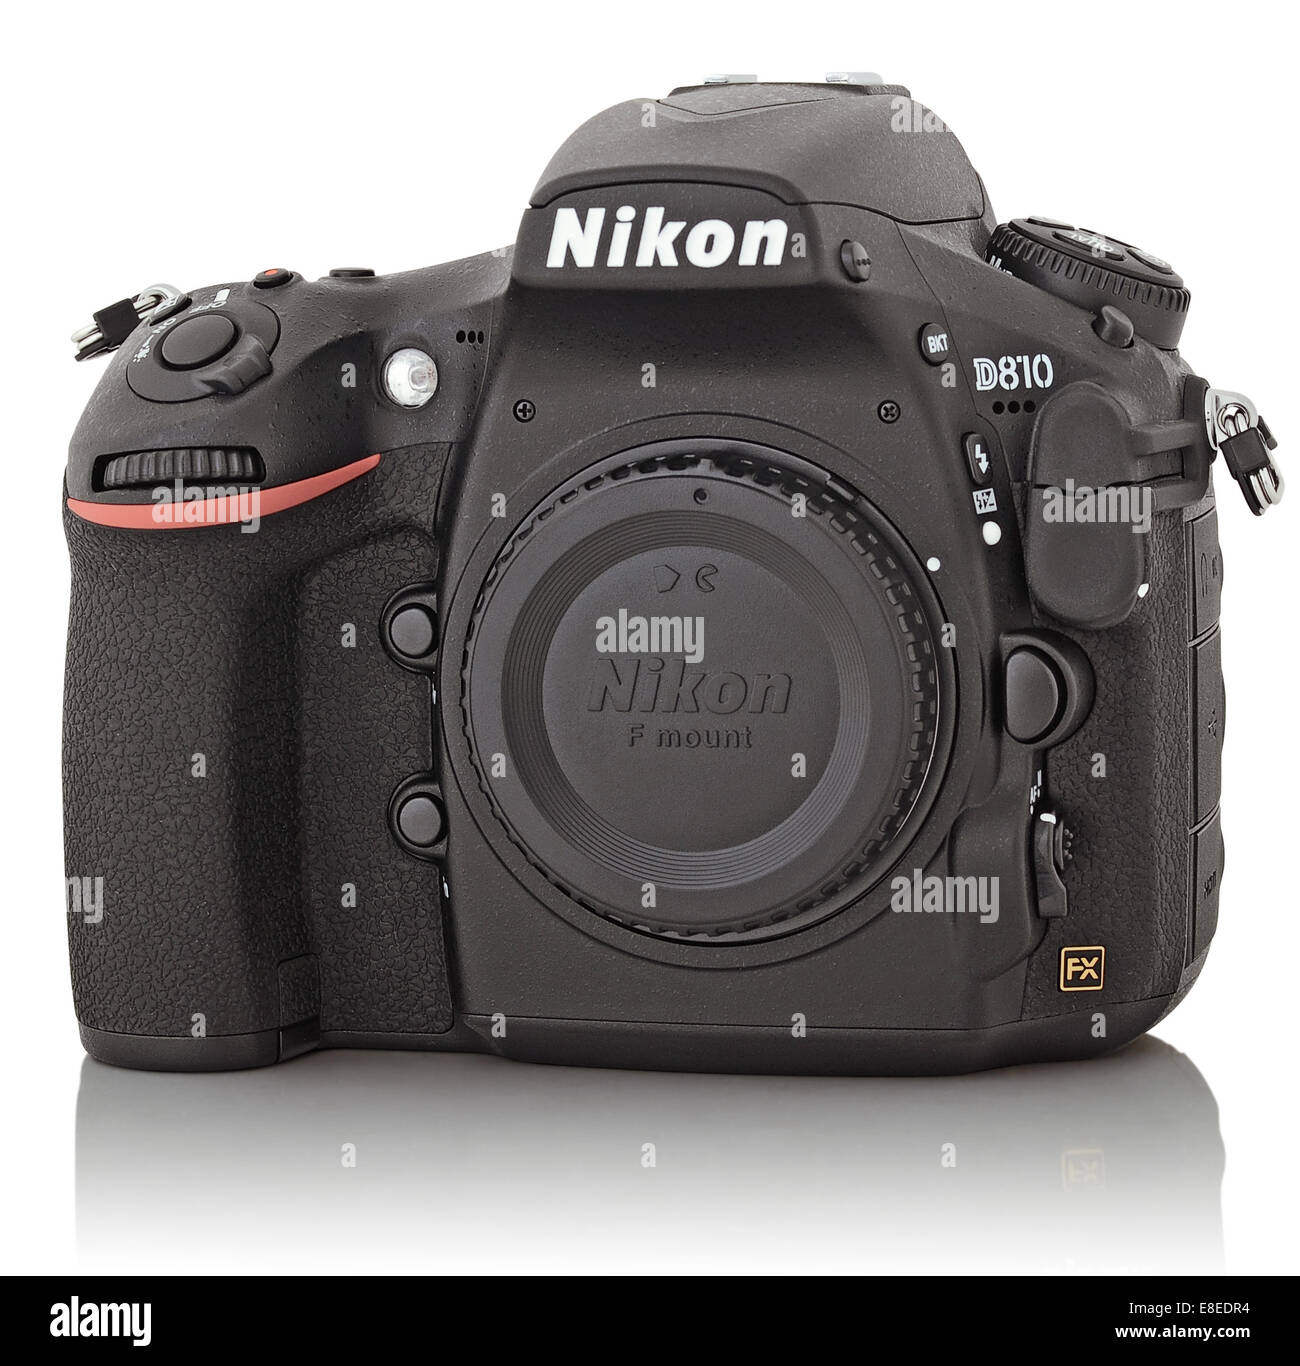 SOCHI, RUSSIA - OCTOBER 06, 2014: Nikon D810 camera body, the first digital  SLR camera in Nikon's history to offer a minimum sta Stock Photo - Alamy